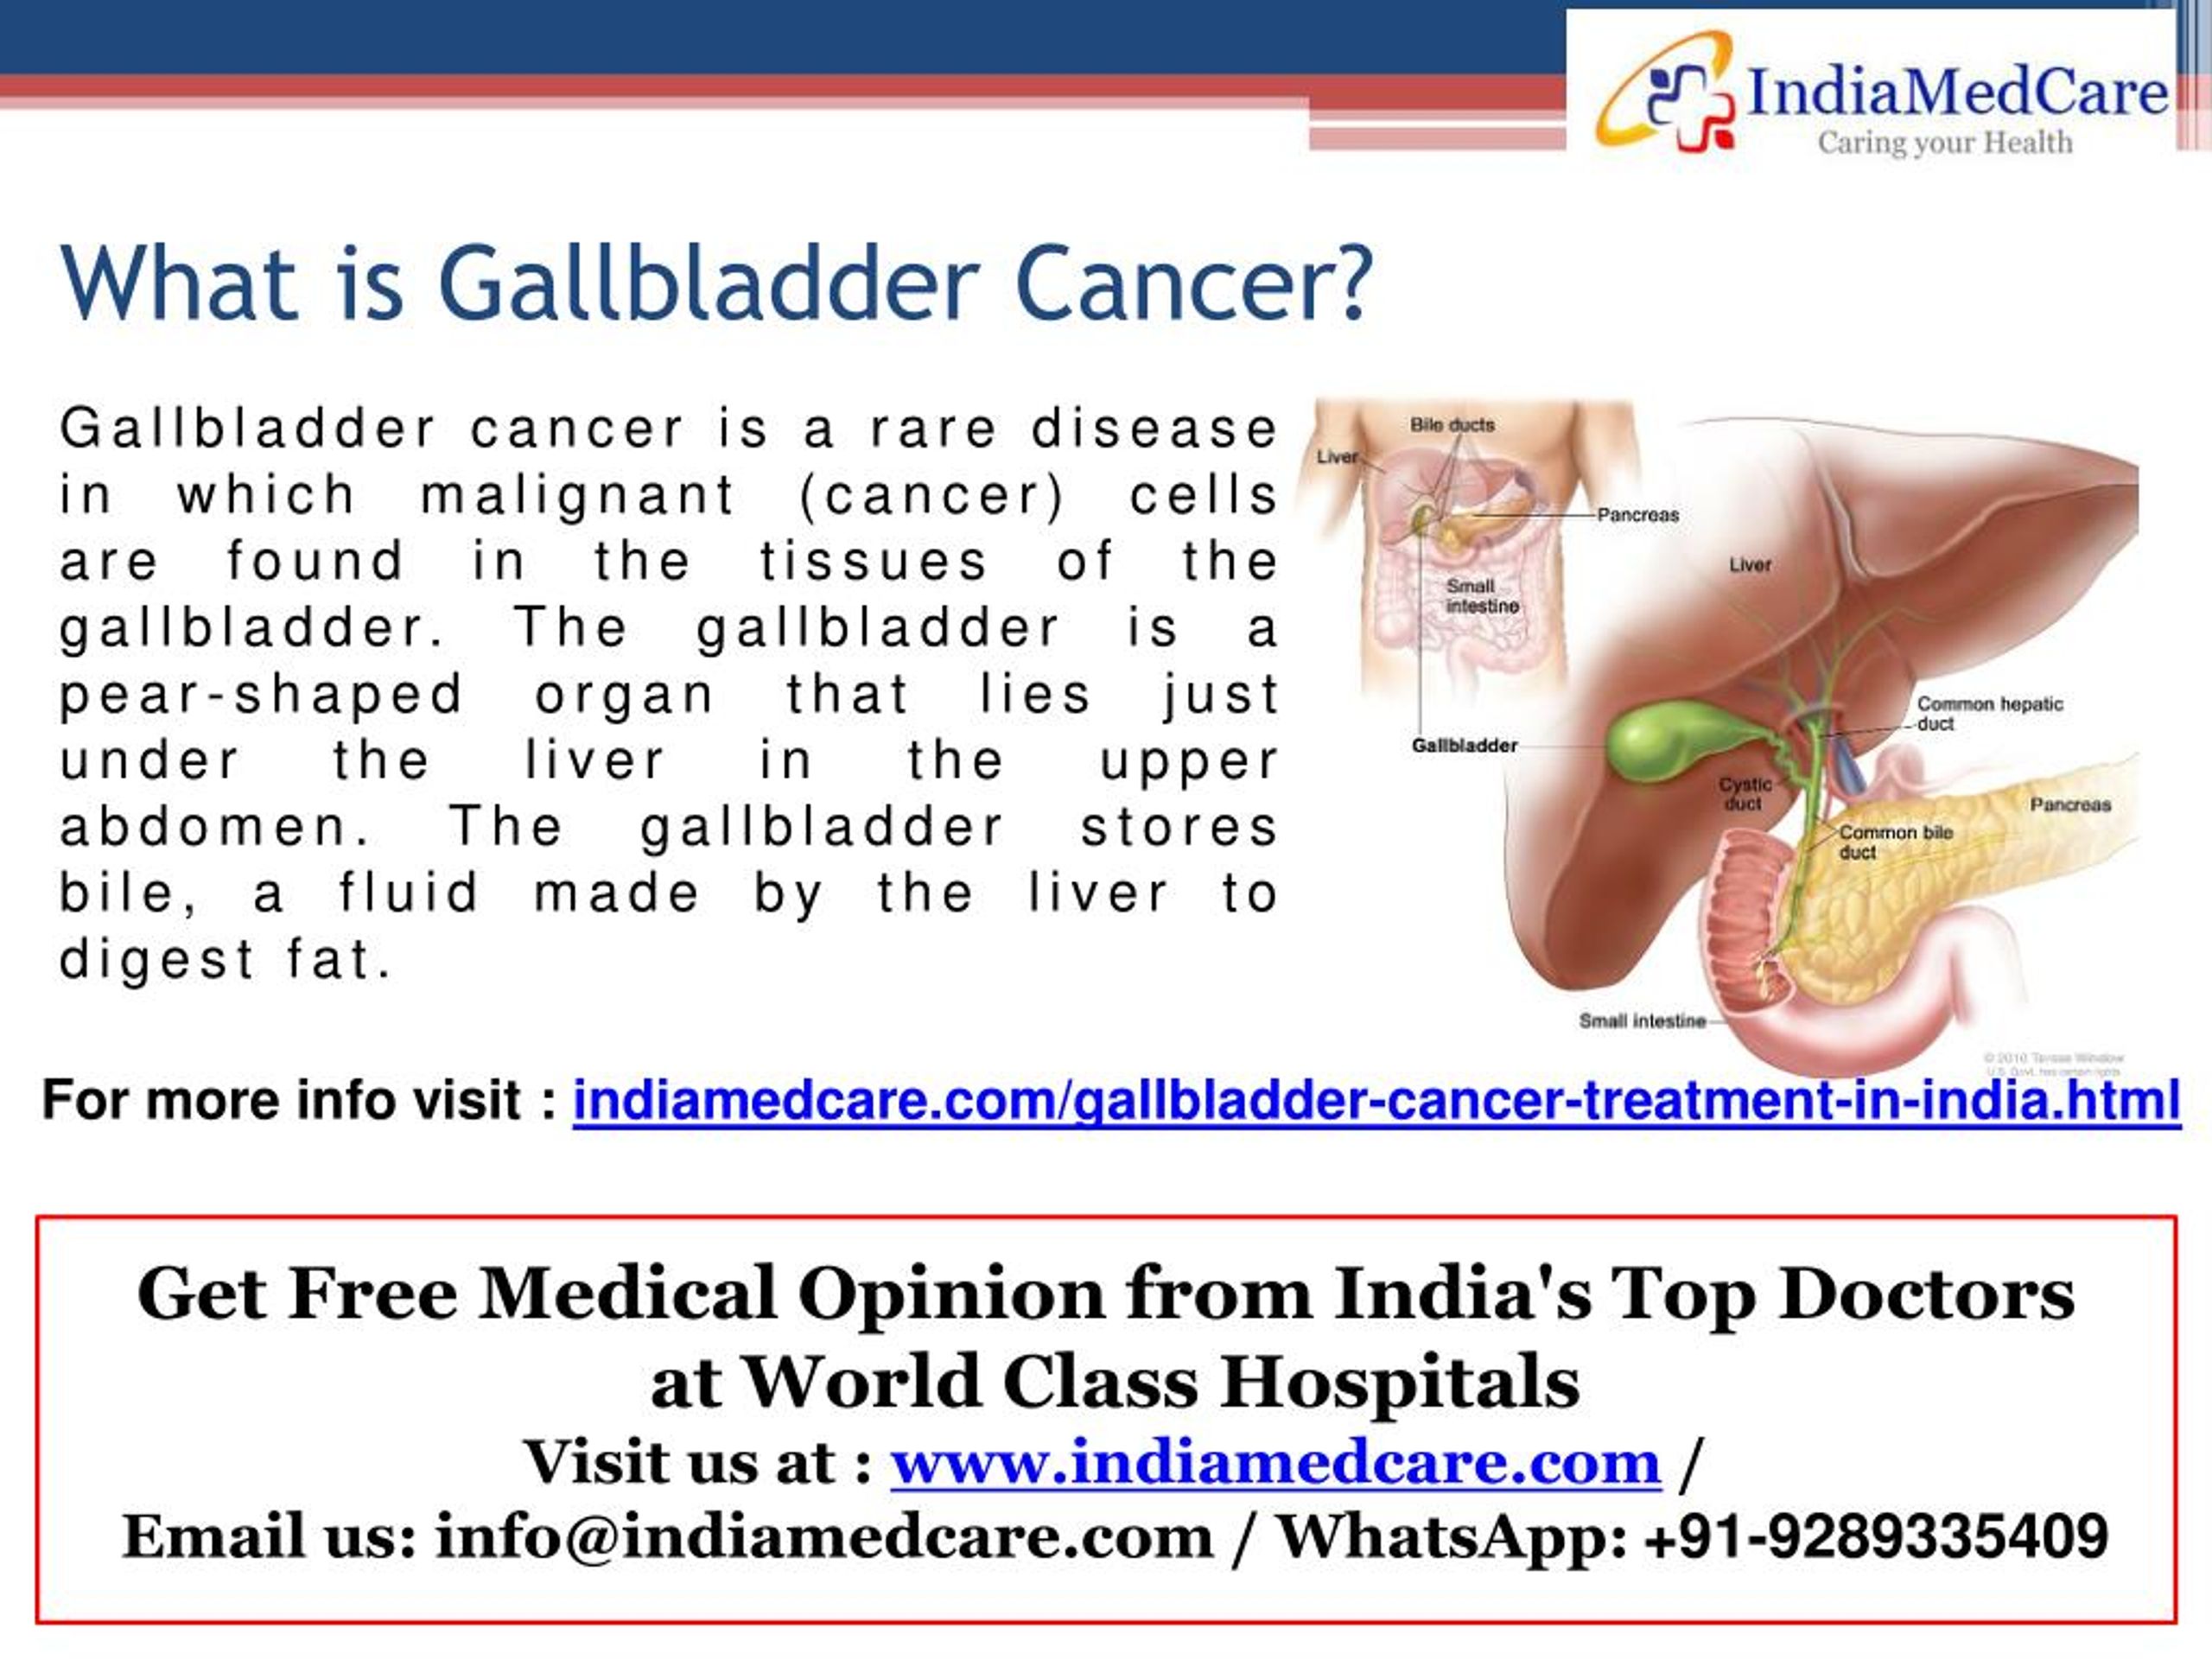 PPT - Gallbladder Cancer Treatment in India PowerPoint Presentation ...